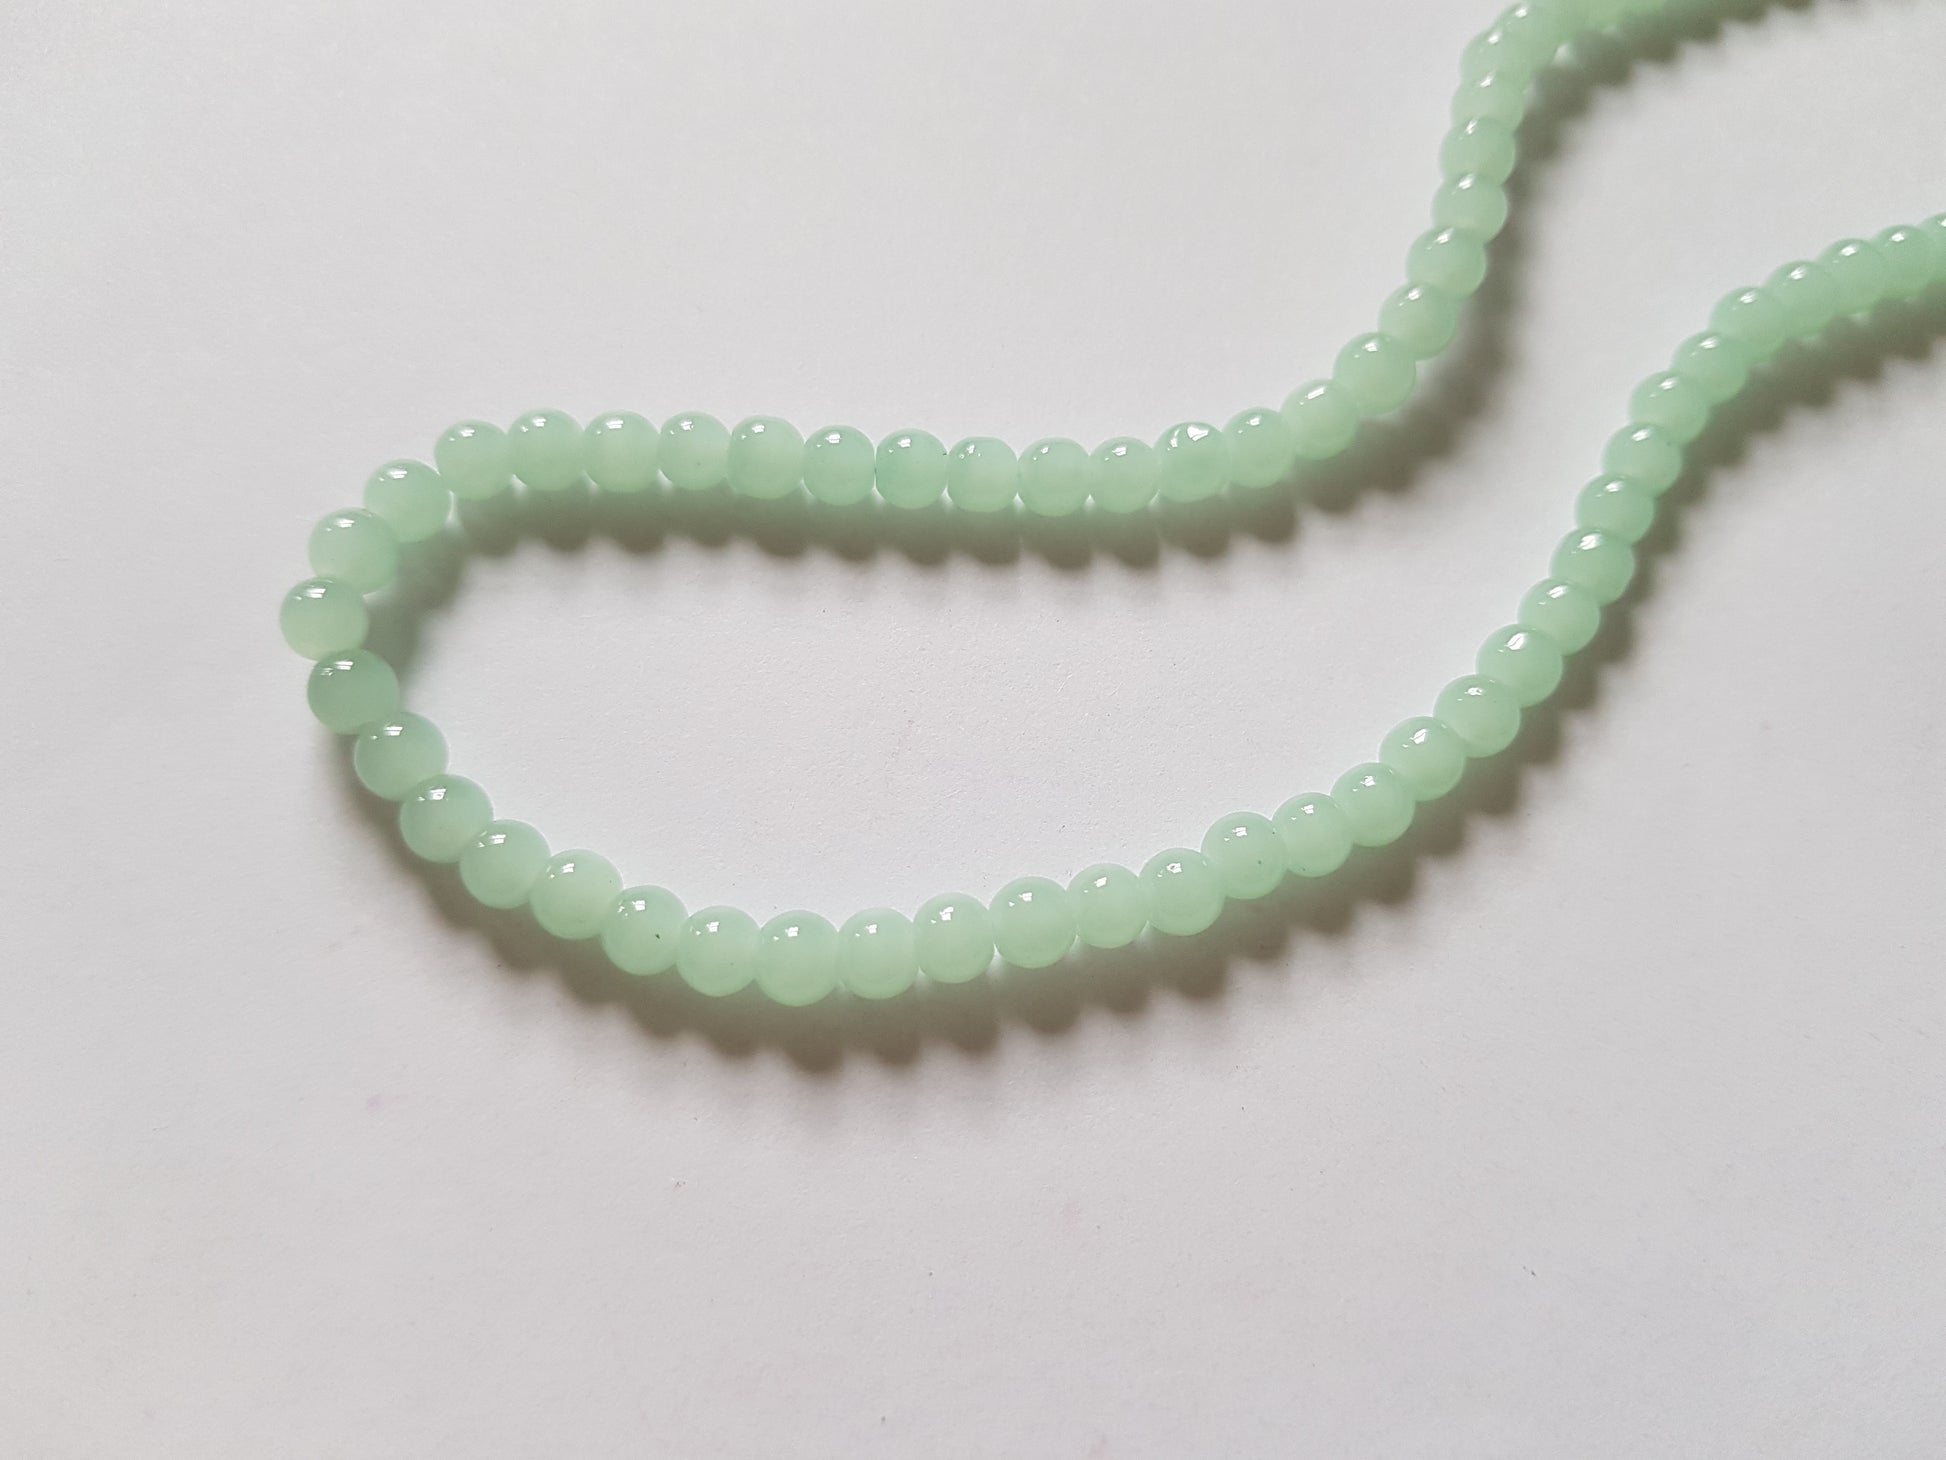 4mm imitation jade glass beads - icy blue